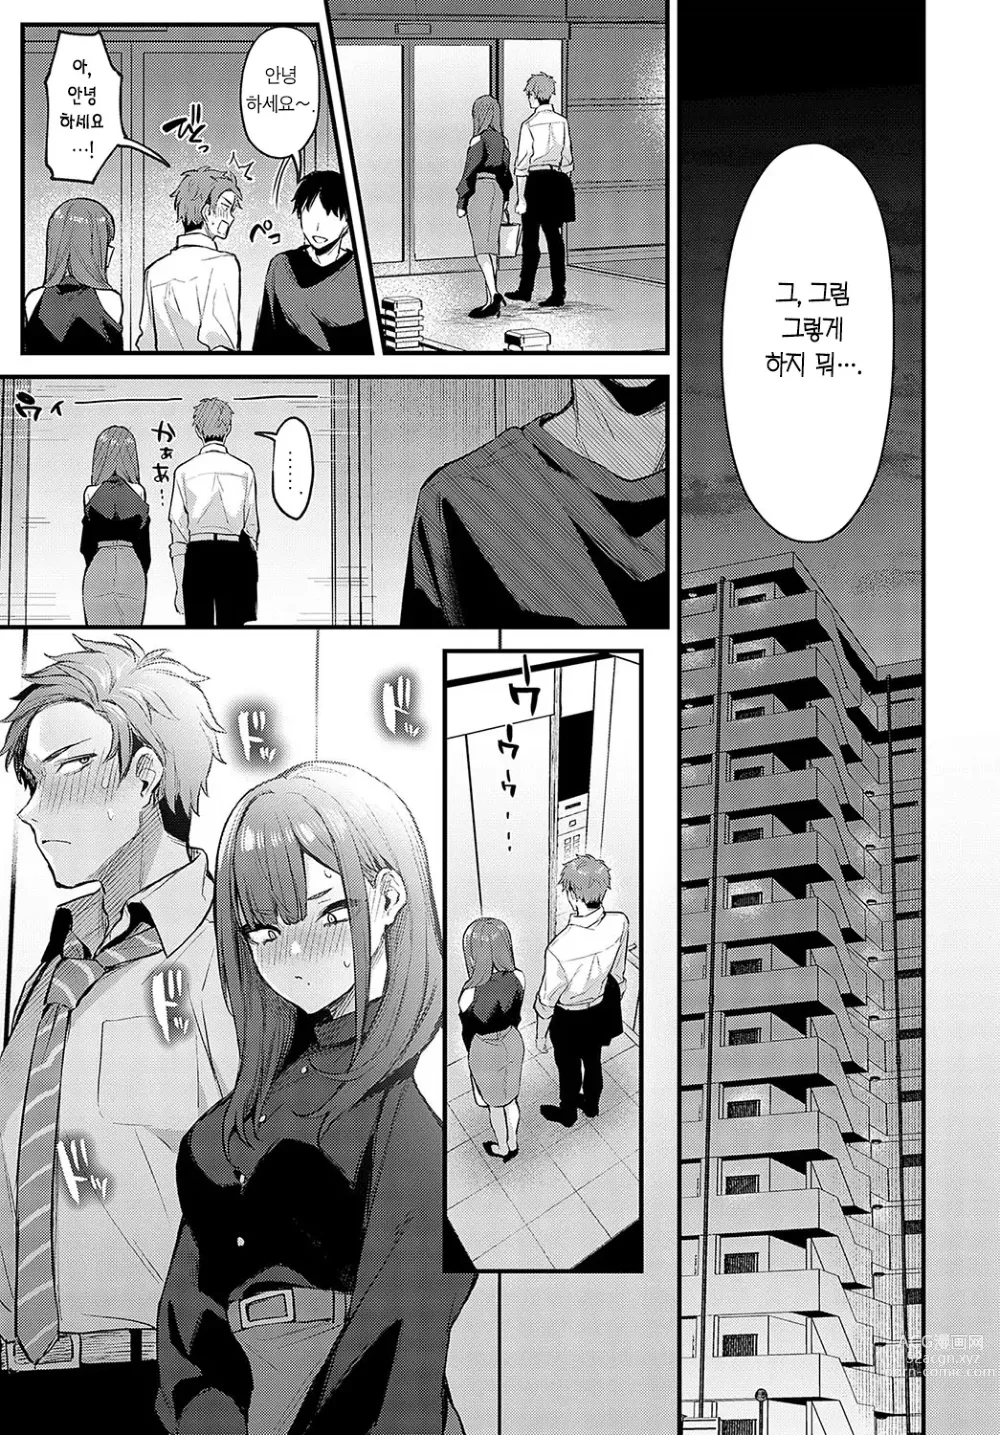 Page 12 of manga 한 번 더, 해보고 싶어.